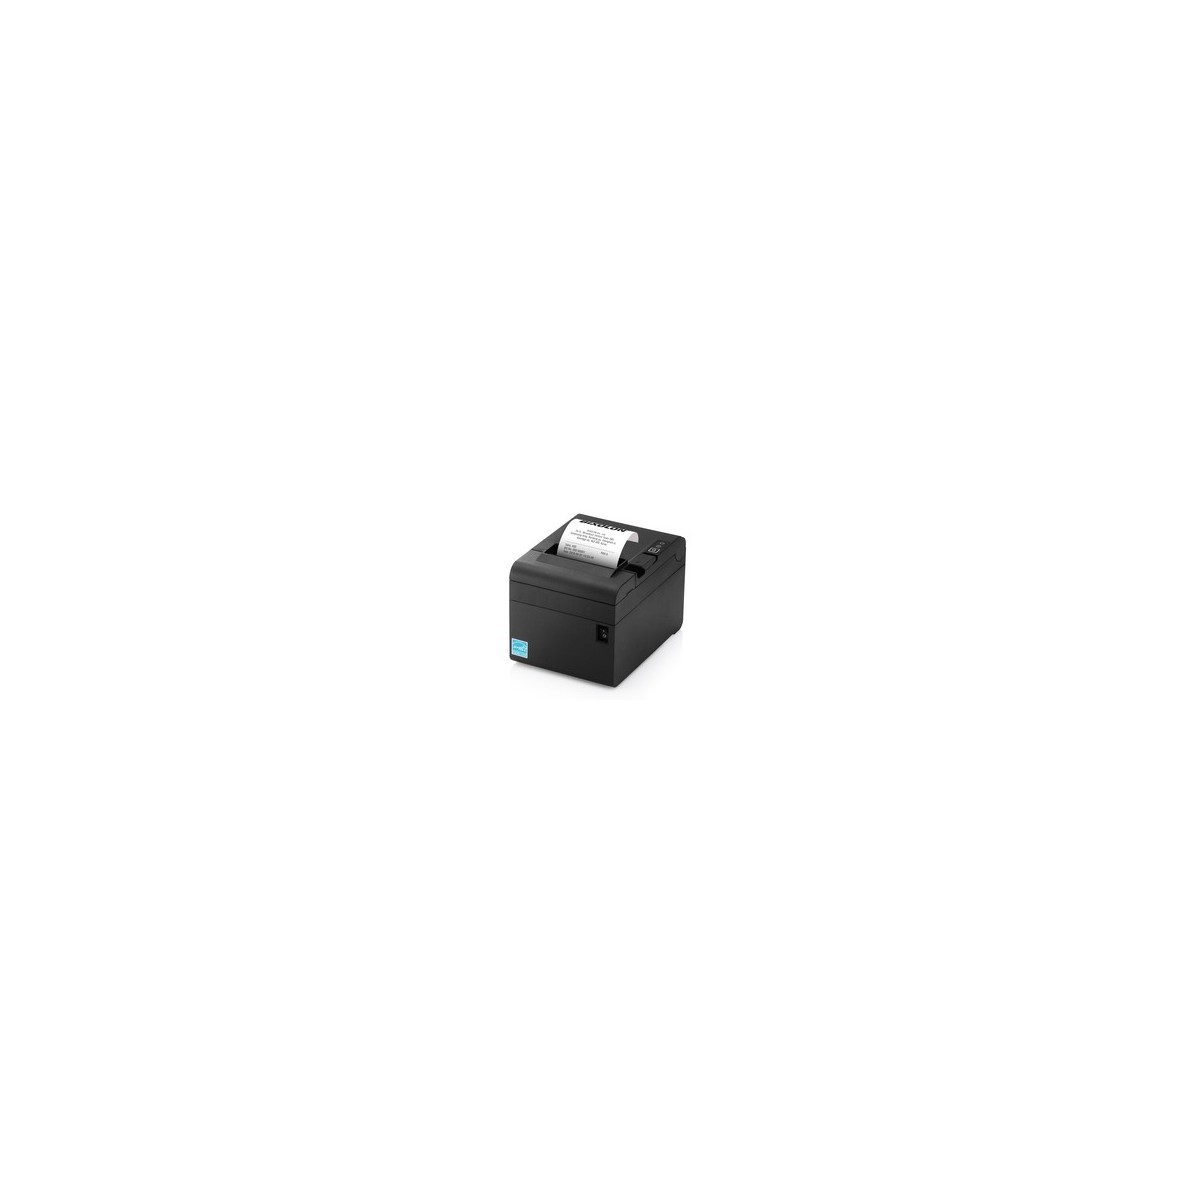 BIXOLON SRP-E300 - Direct thermal - POS printer - 220 mm-sec - 0.062 - 0.075 µm - 8.3 cm - 80 mm